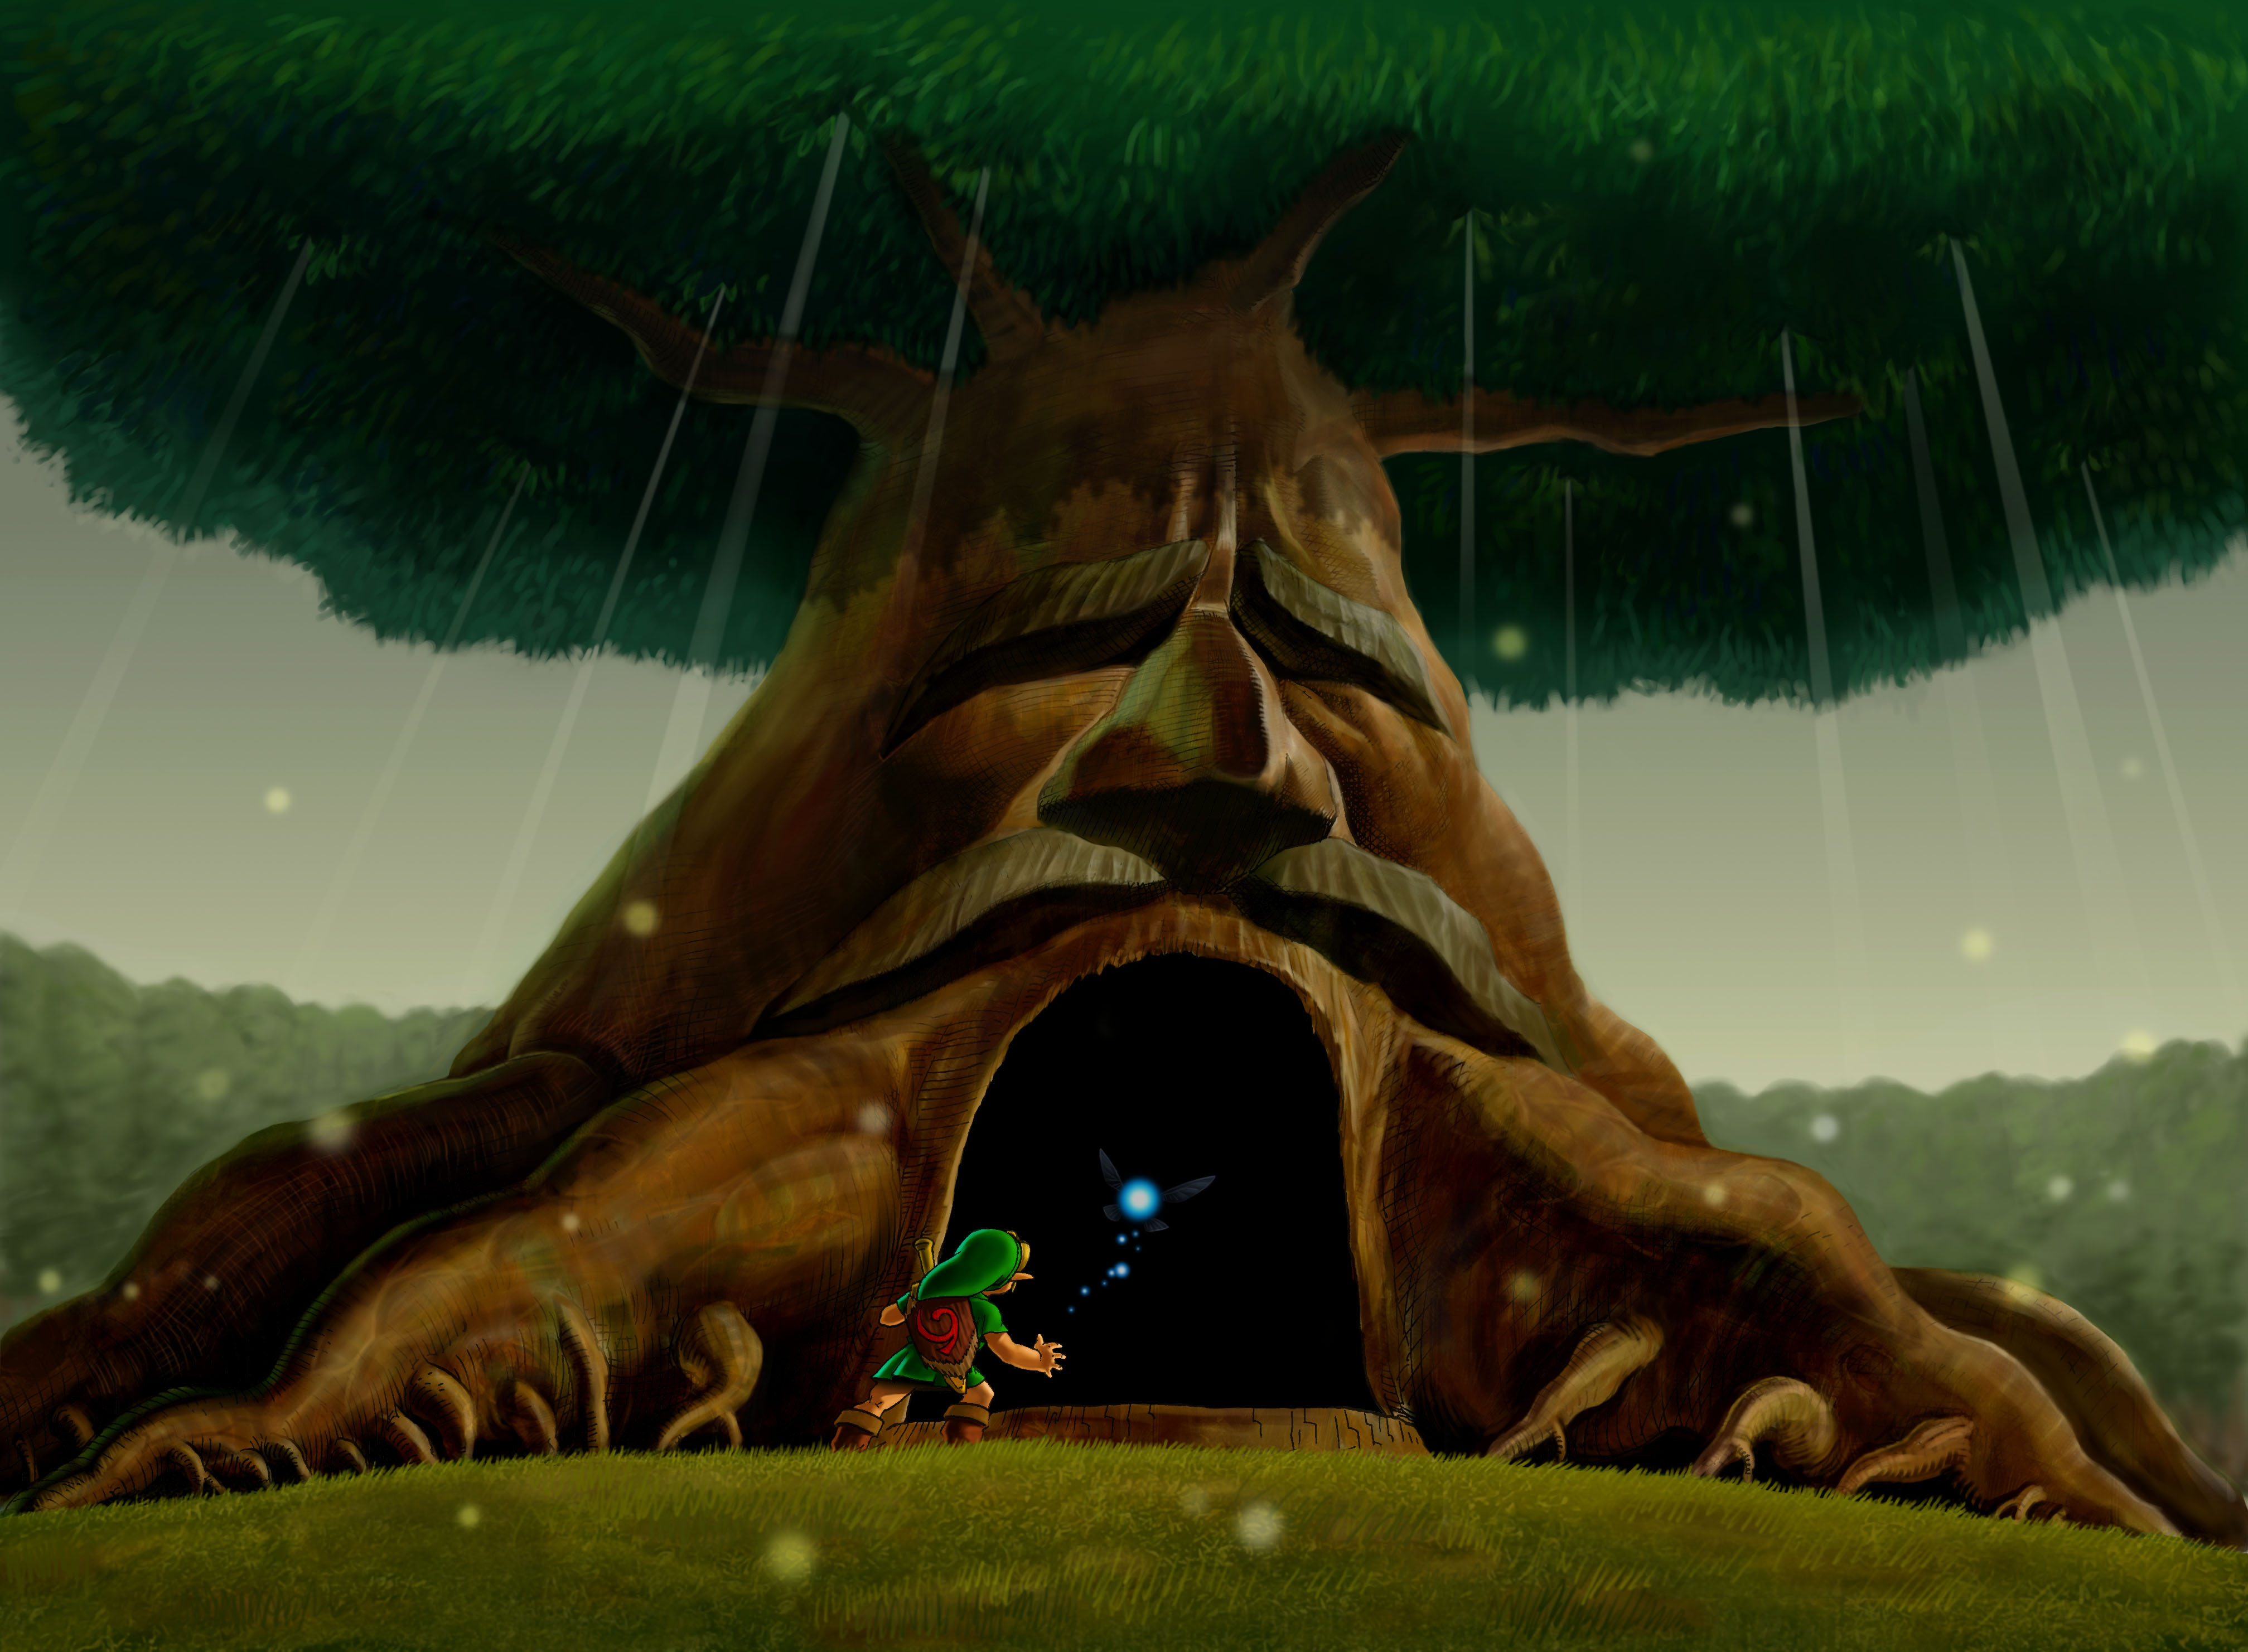 Reliving the Legend - A Legend of Zelda: Ocarina of Time 3D Review